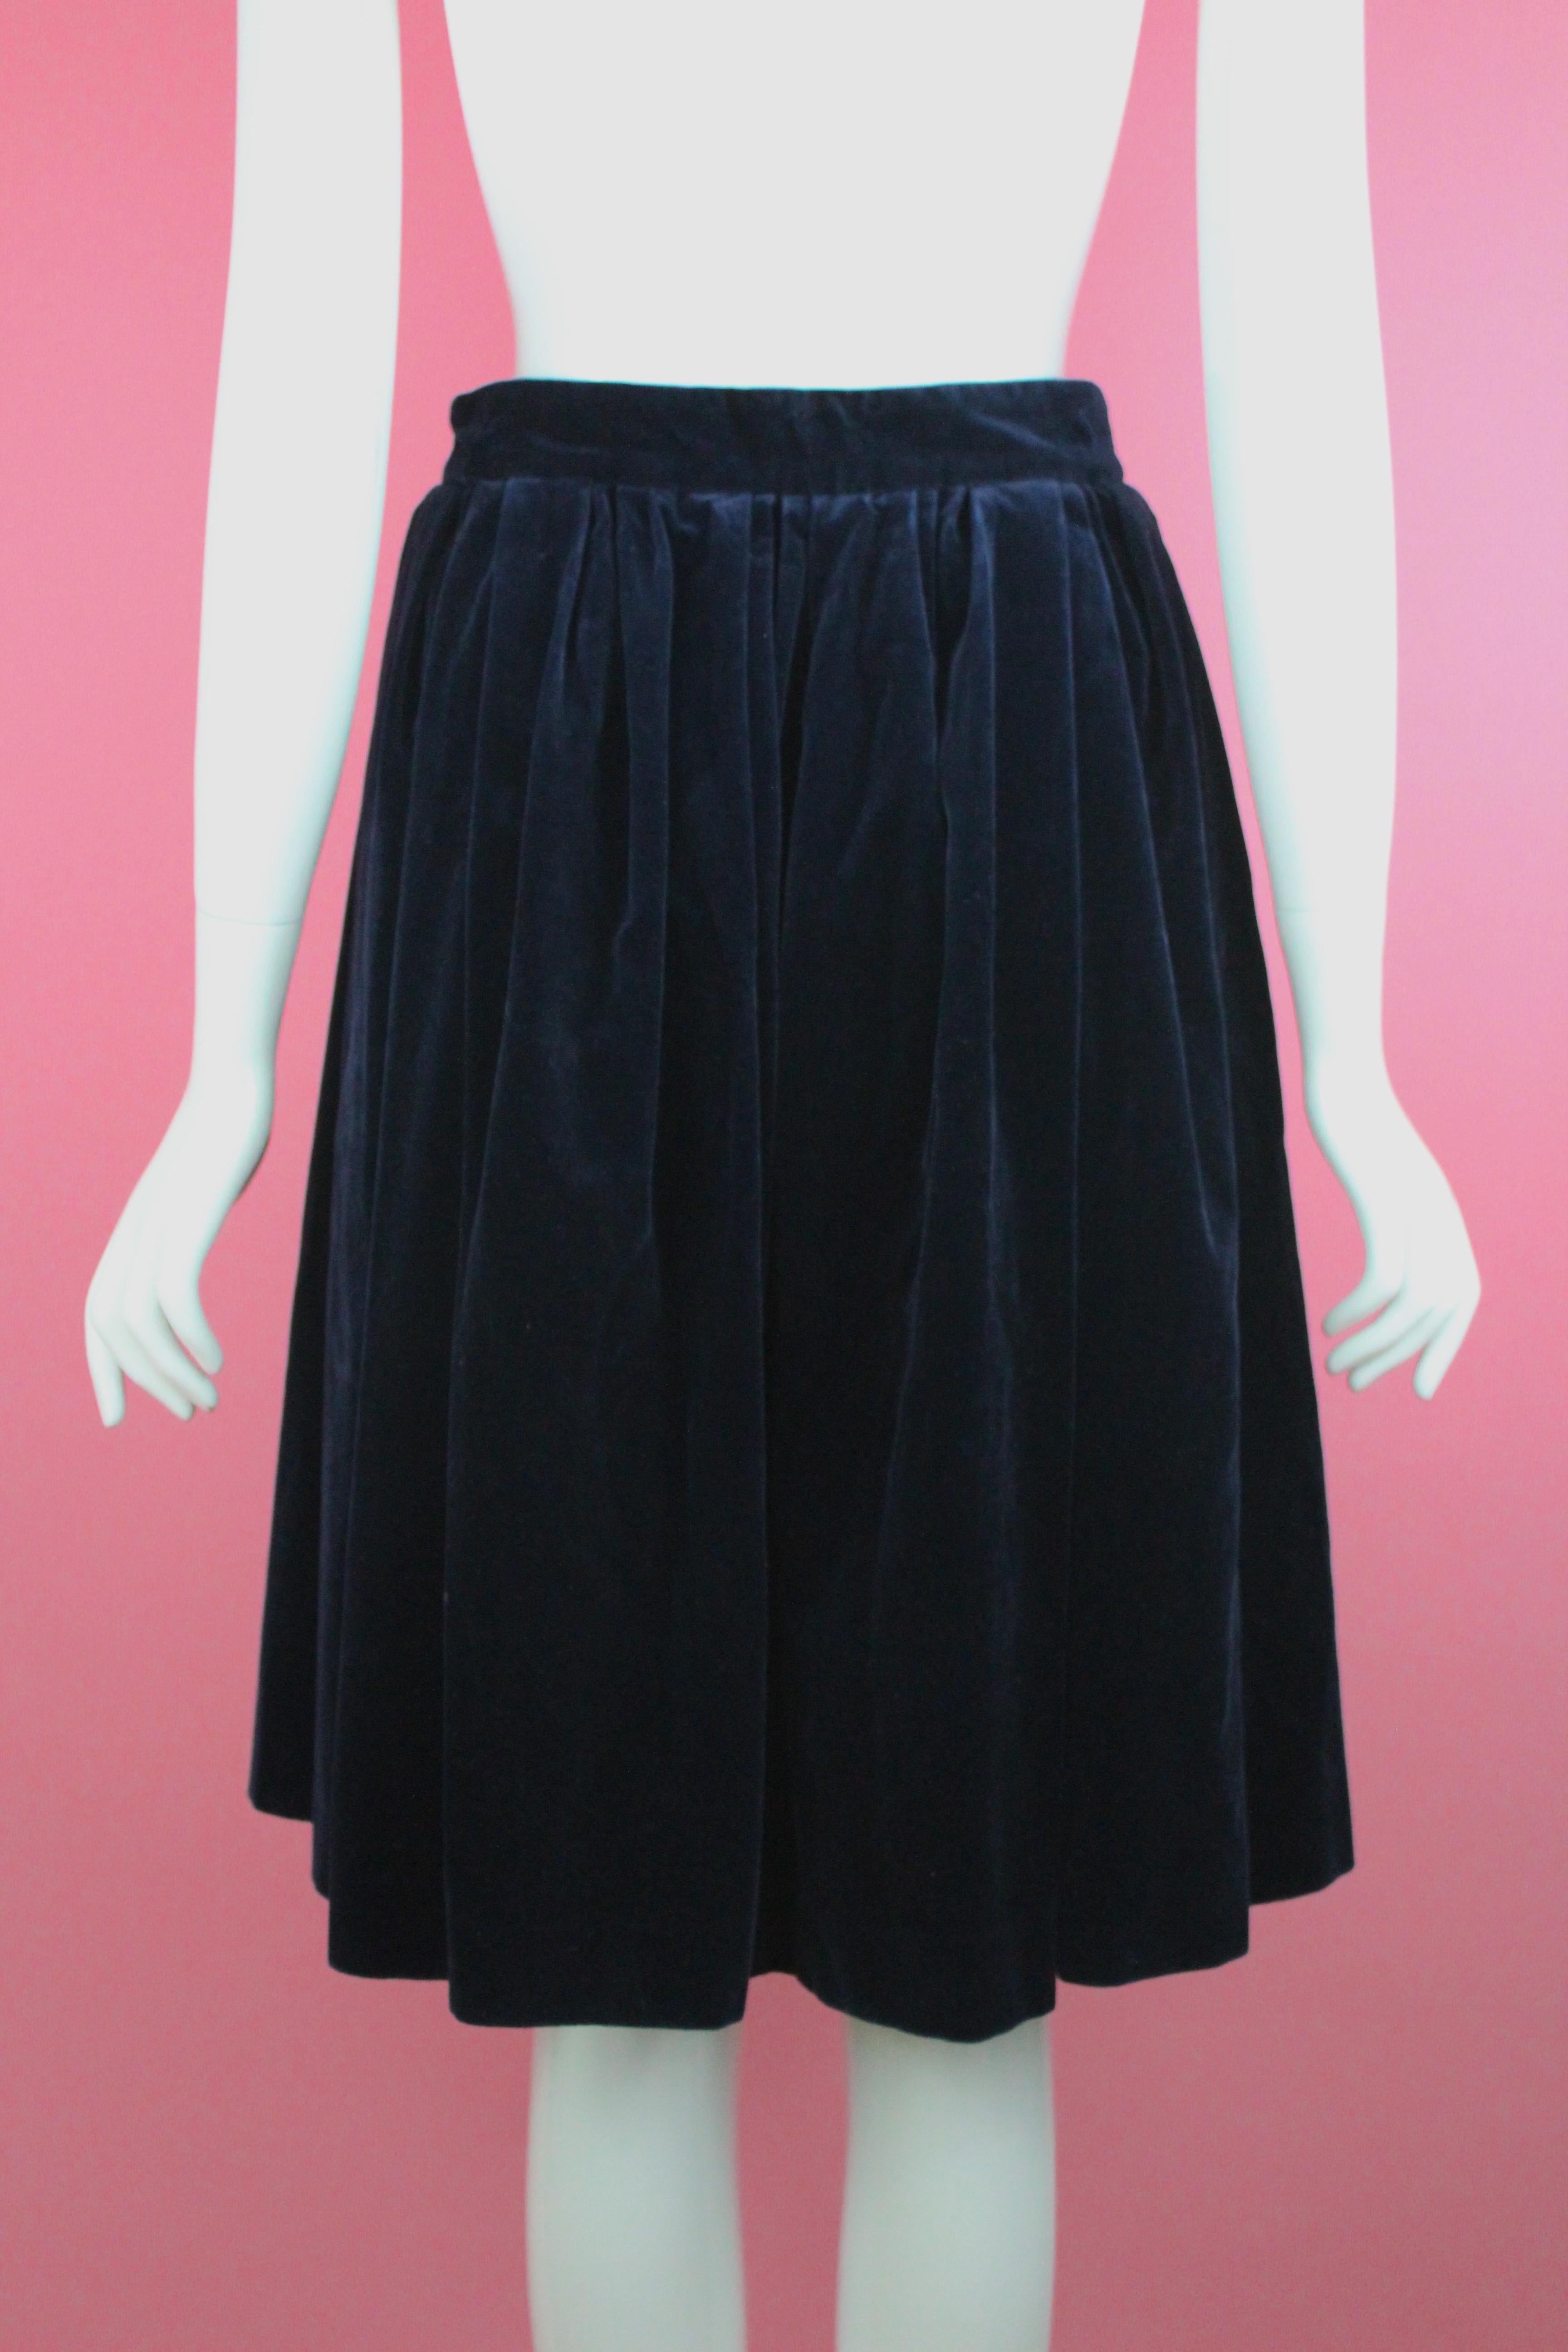 Vivienne Westwood Blue Velvet Corset & Skirt, Red Label c. 90's, Size 6 US For Sale 3